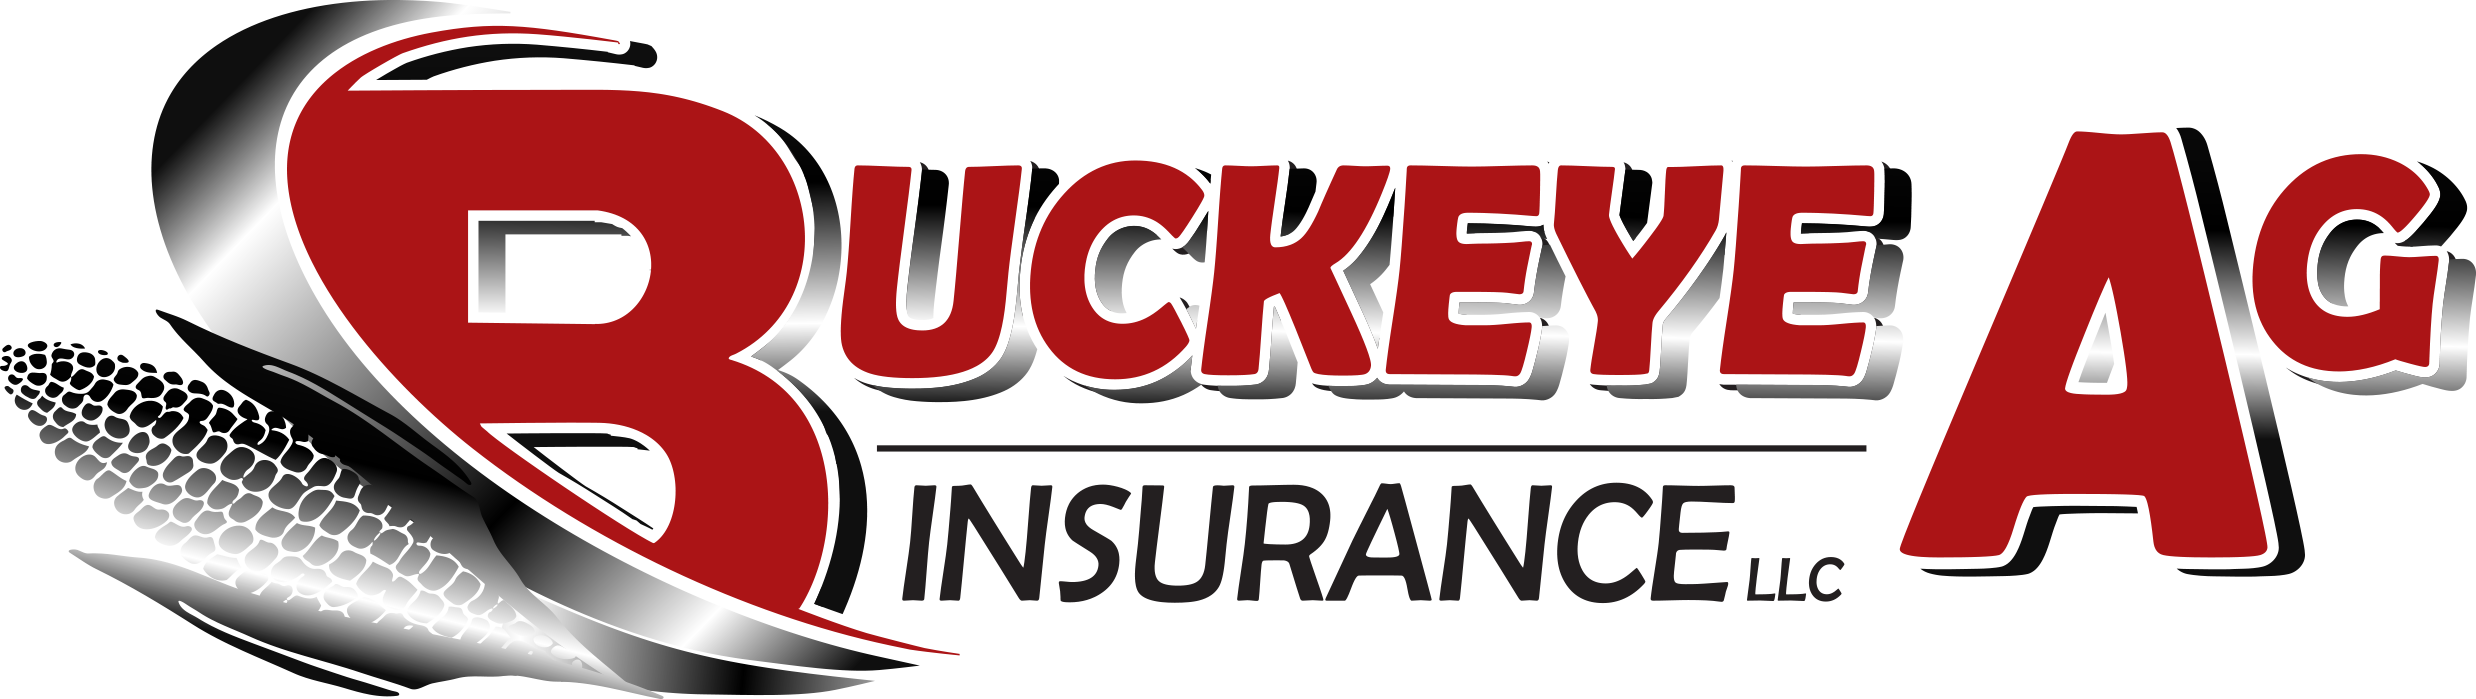 Buckeye Ag Insurance Logo